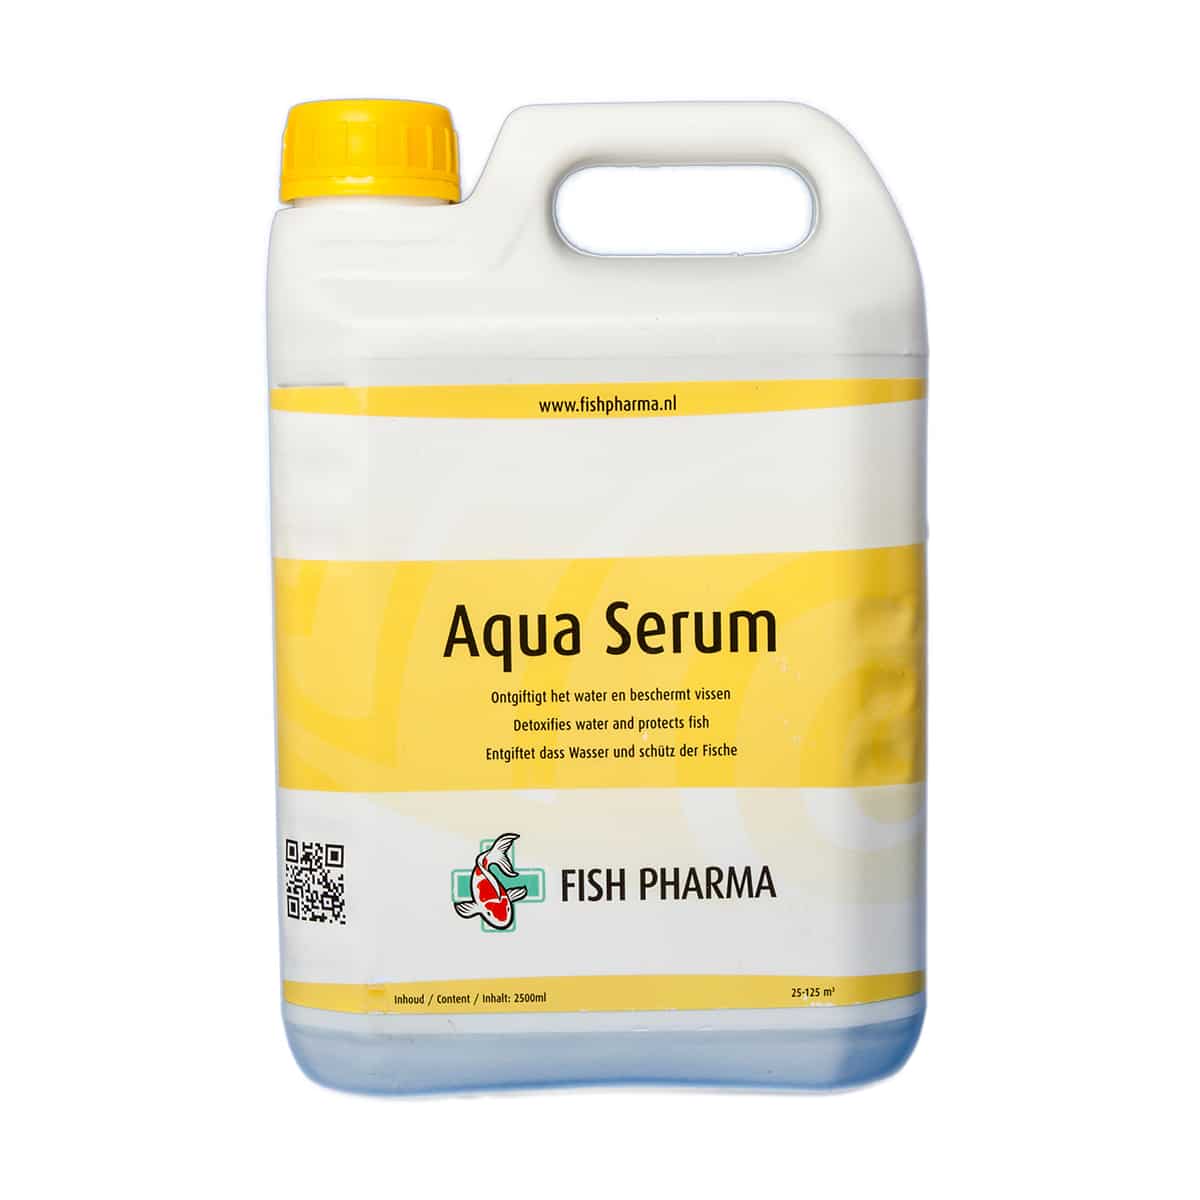 Fish-pharma Aqua Serum - 2,5 Liter